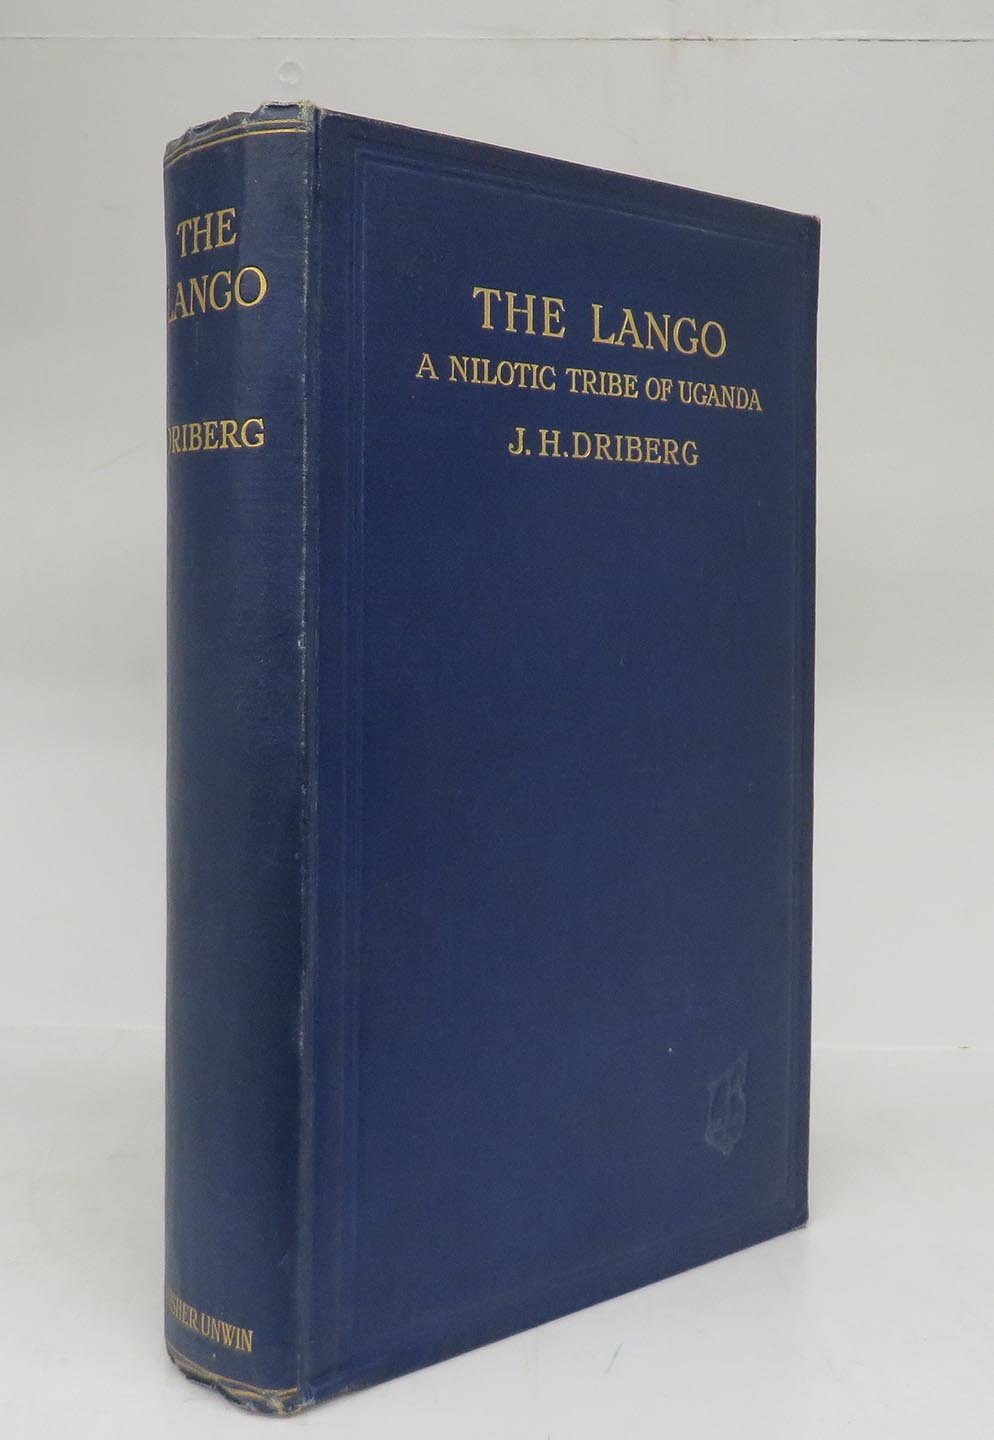 The Lango: A Nilotic Tribe of Uganda